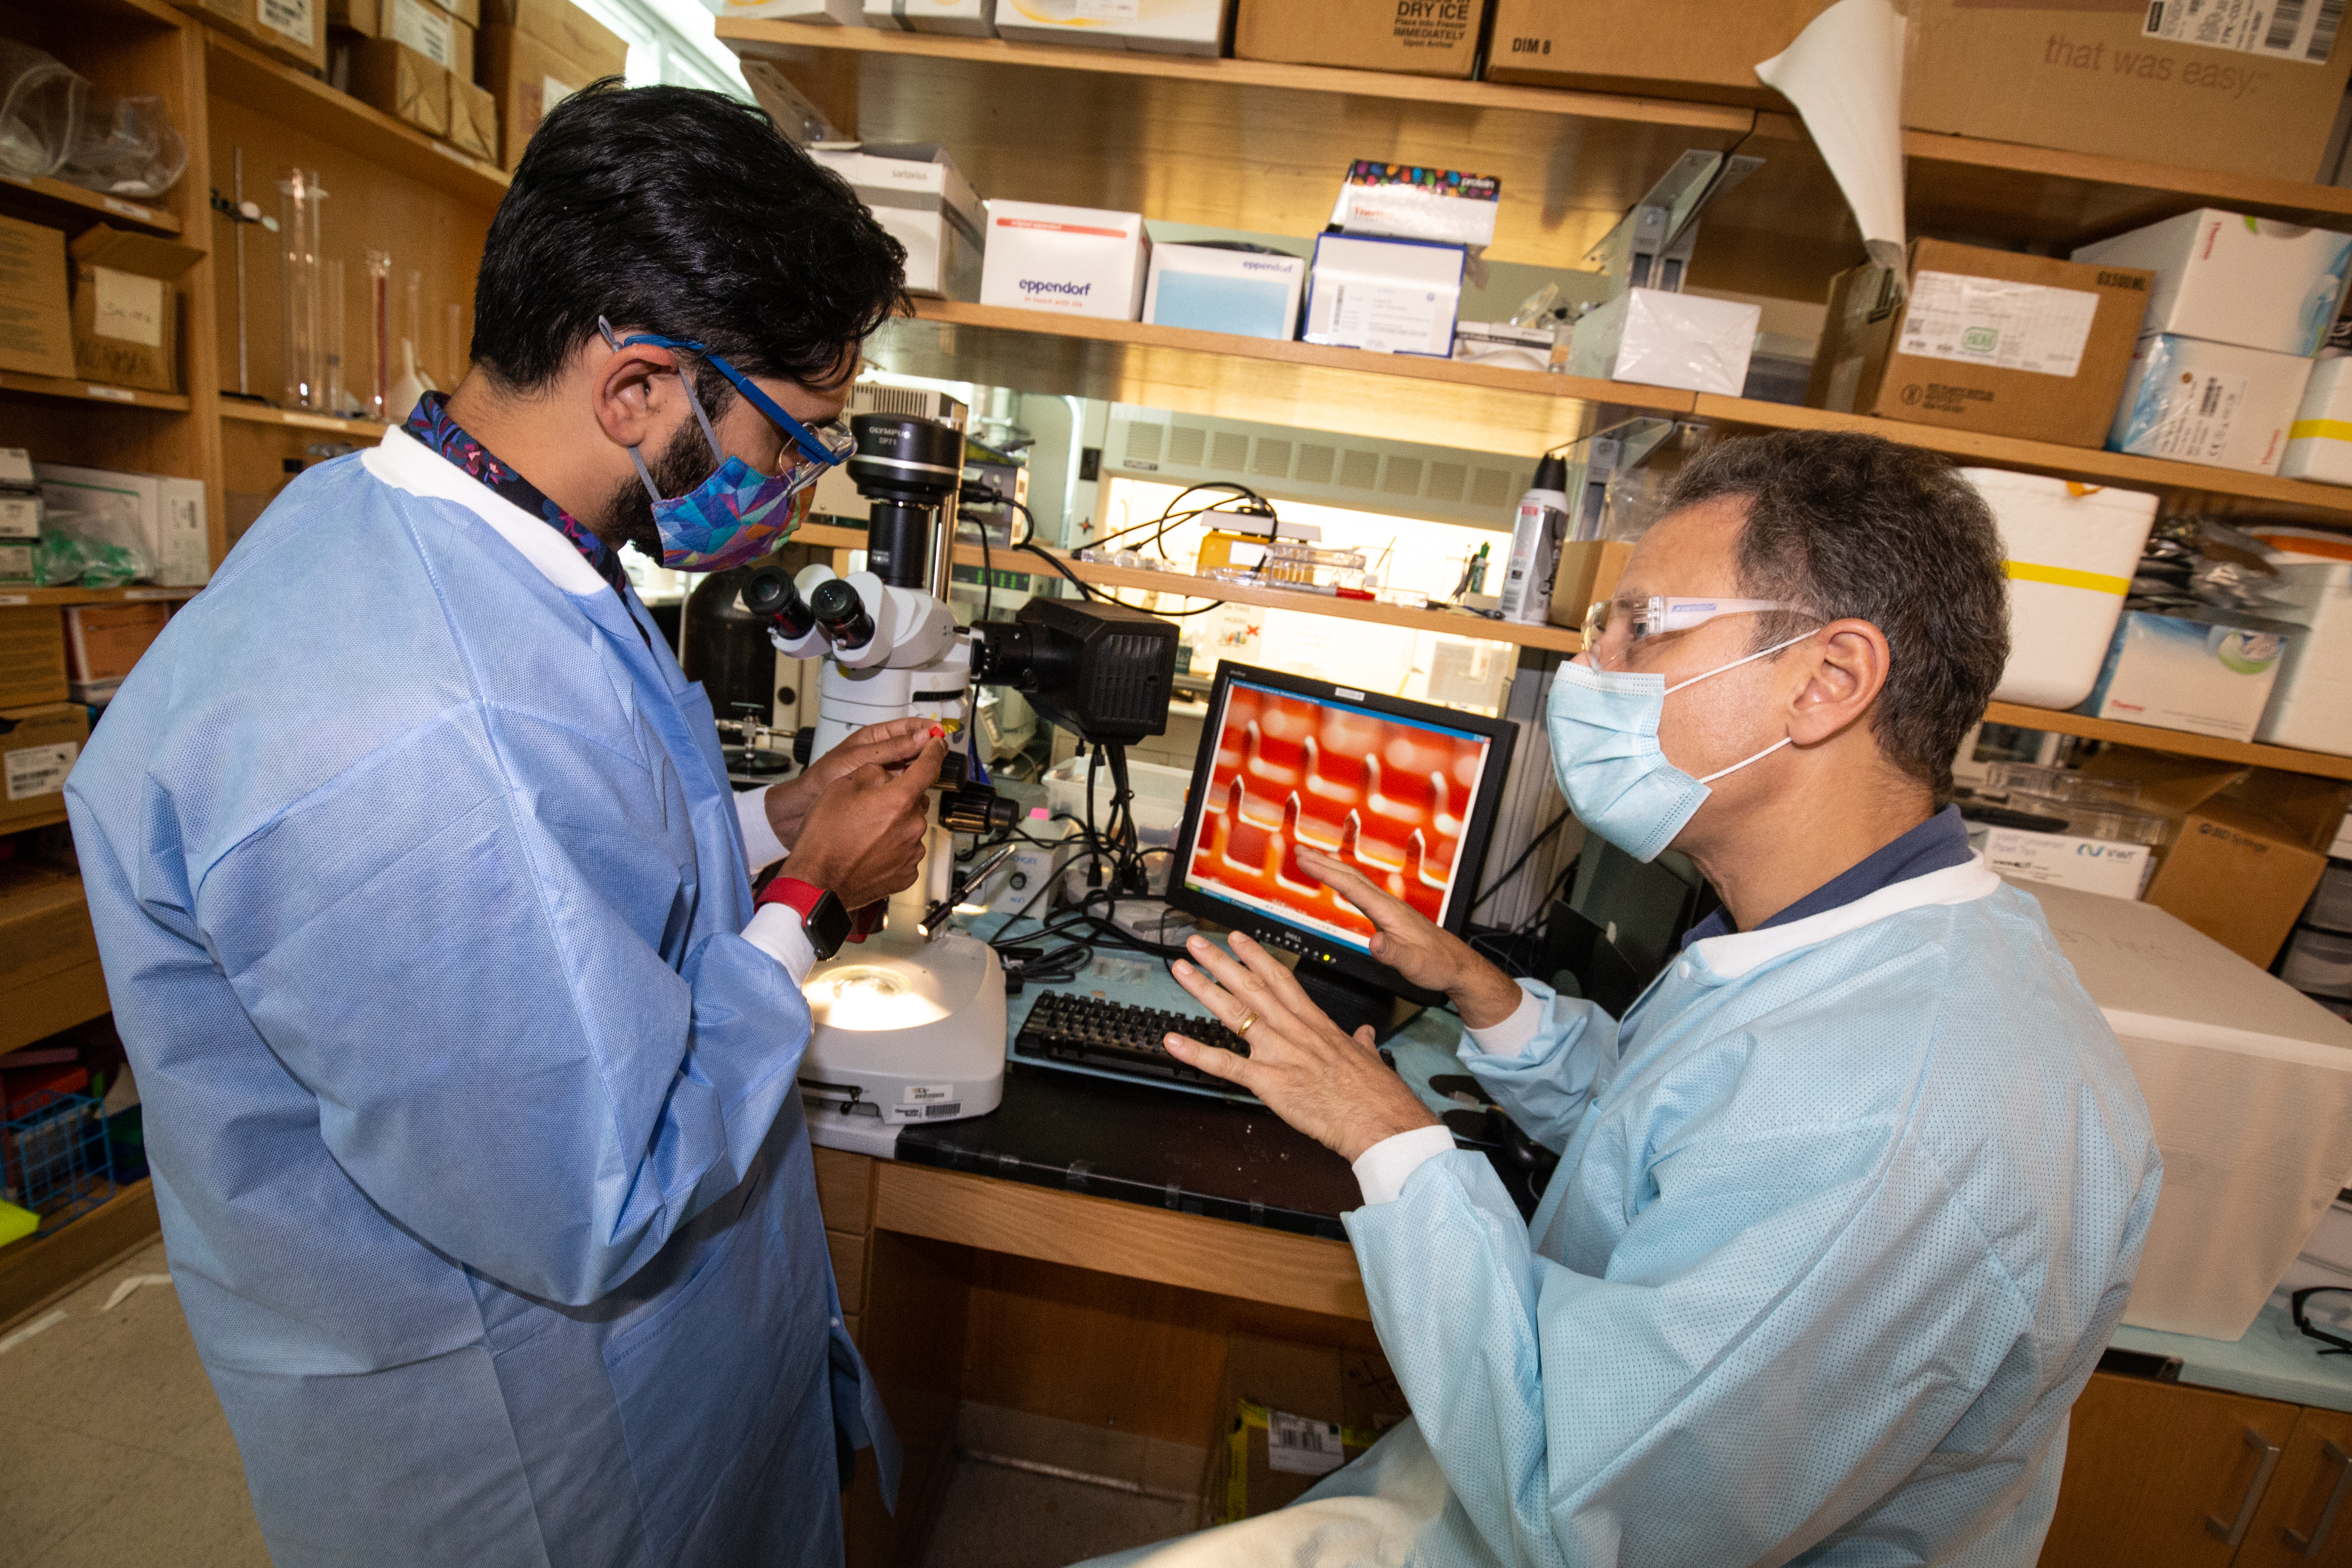 Georgia Tech researchers Saad Bhamla (left) and Mark Prausnitz (right) study the ePatch in the laboratory